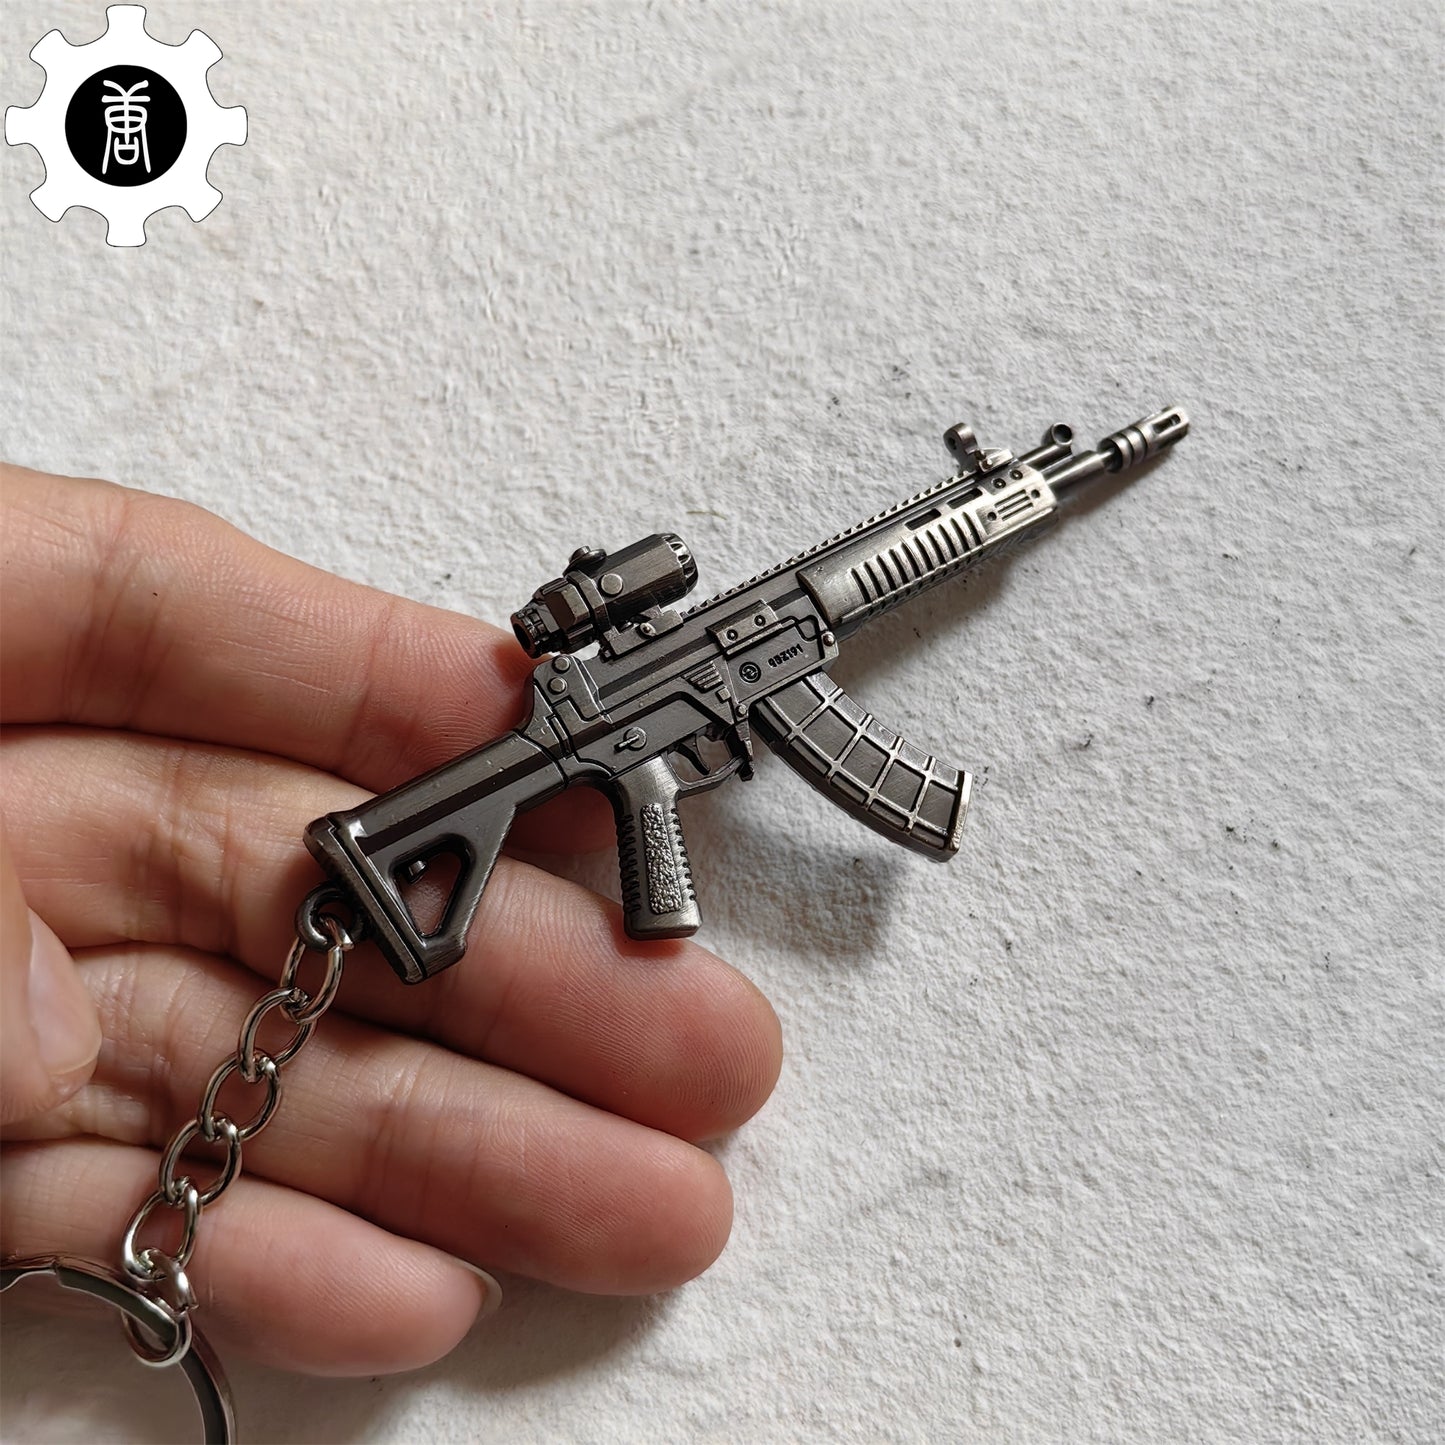 Tiny QBZ-191 Assault Rifle Metal Keychain